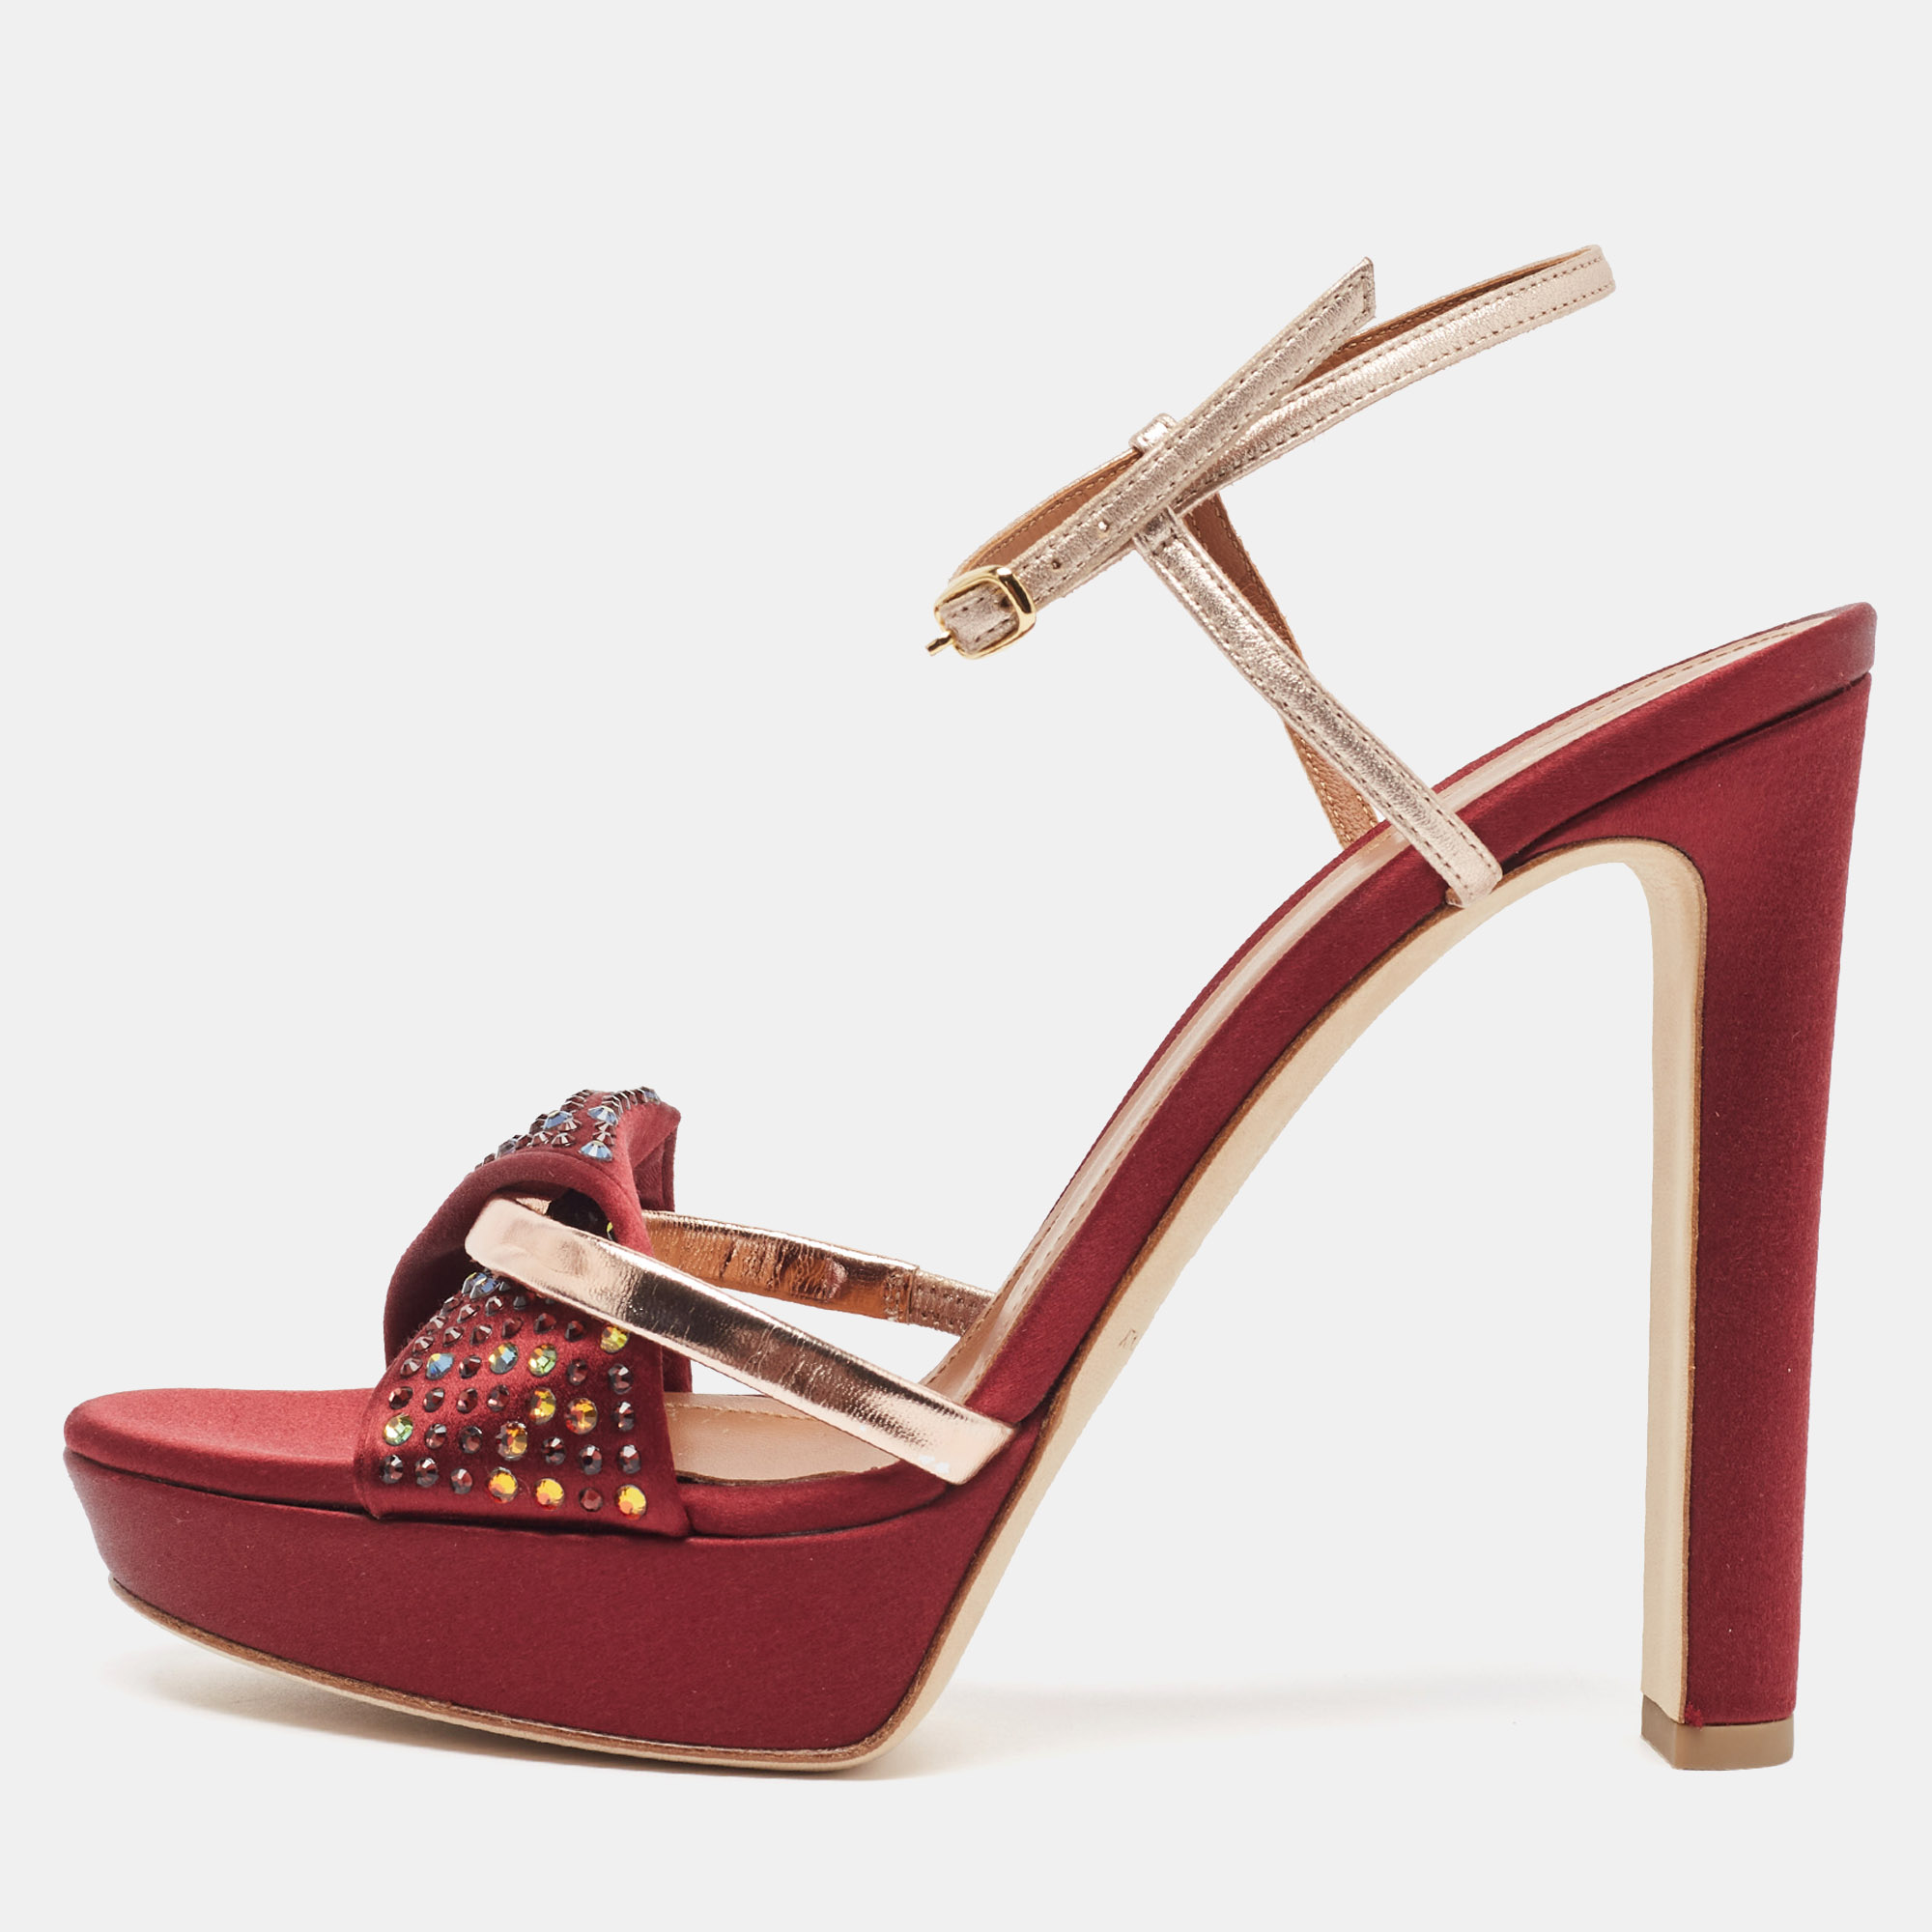 Malone souliers burgundy/rose gold satin and leather lauren platform sandals size 39.5